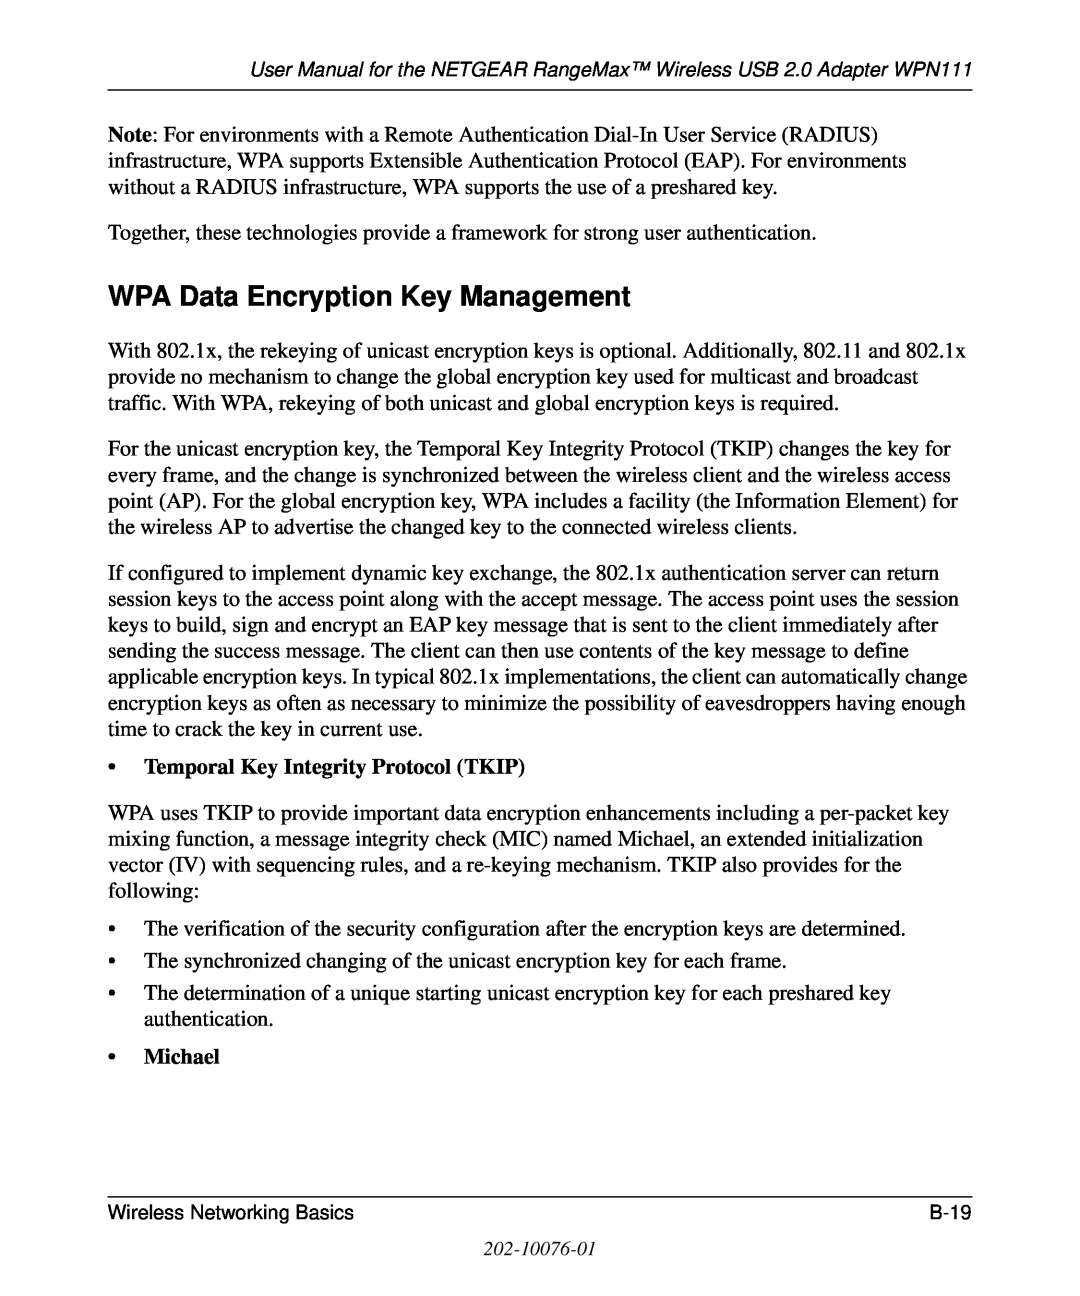 NETGEAR WPN111 user manual WPA Data Encryption Key Management, Temporal Key Integrity Protocol TKIP, Michael 